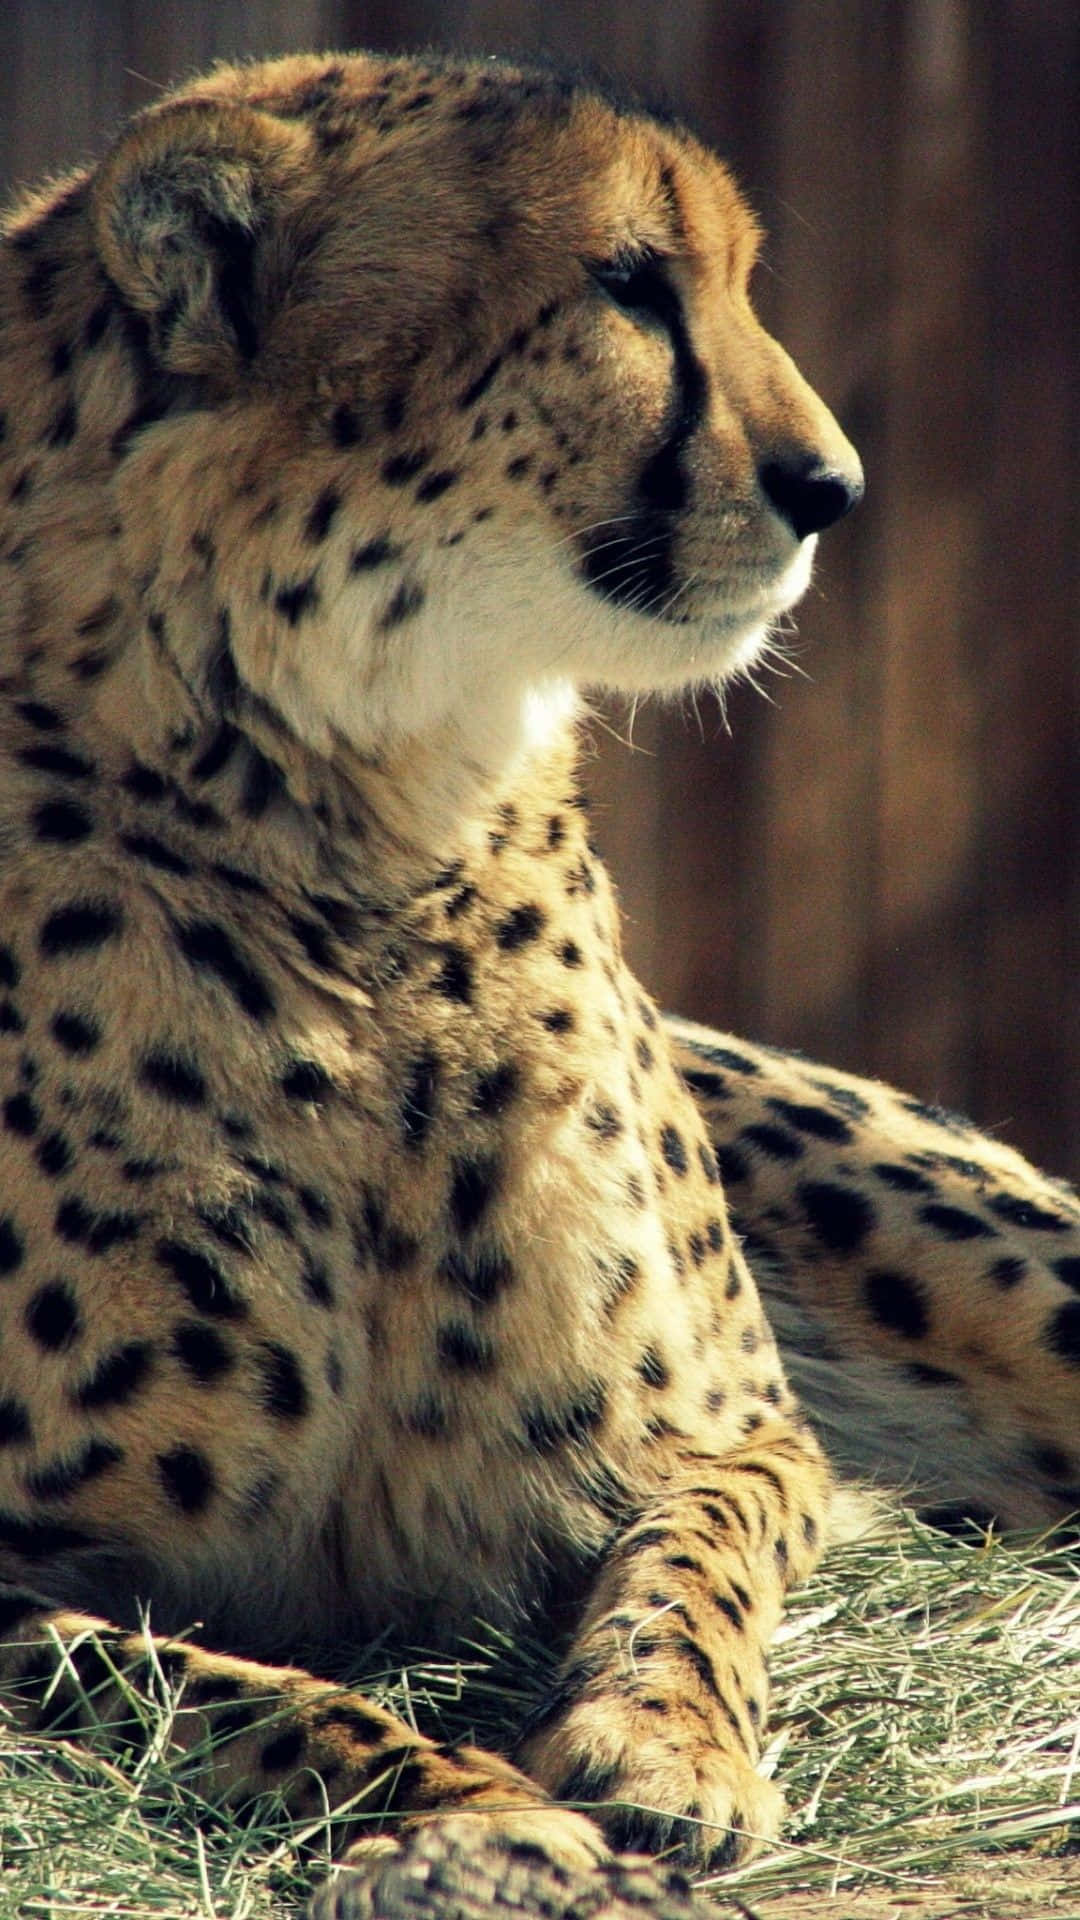 En tæt op af de smukke gepards glitrende øjne. Wallpaper